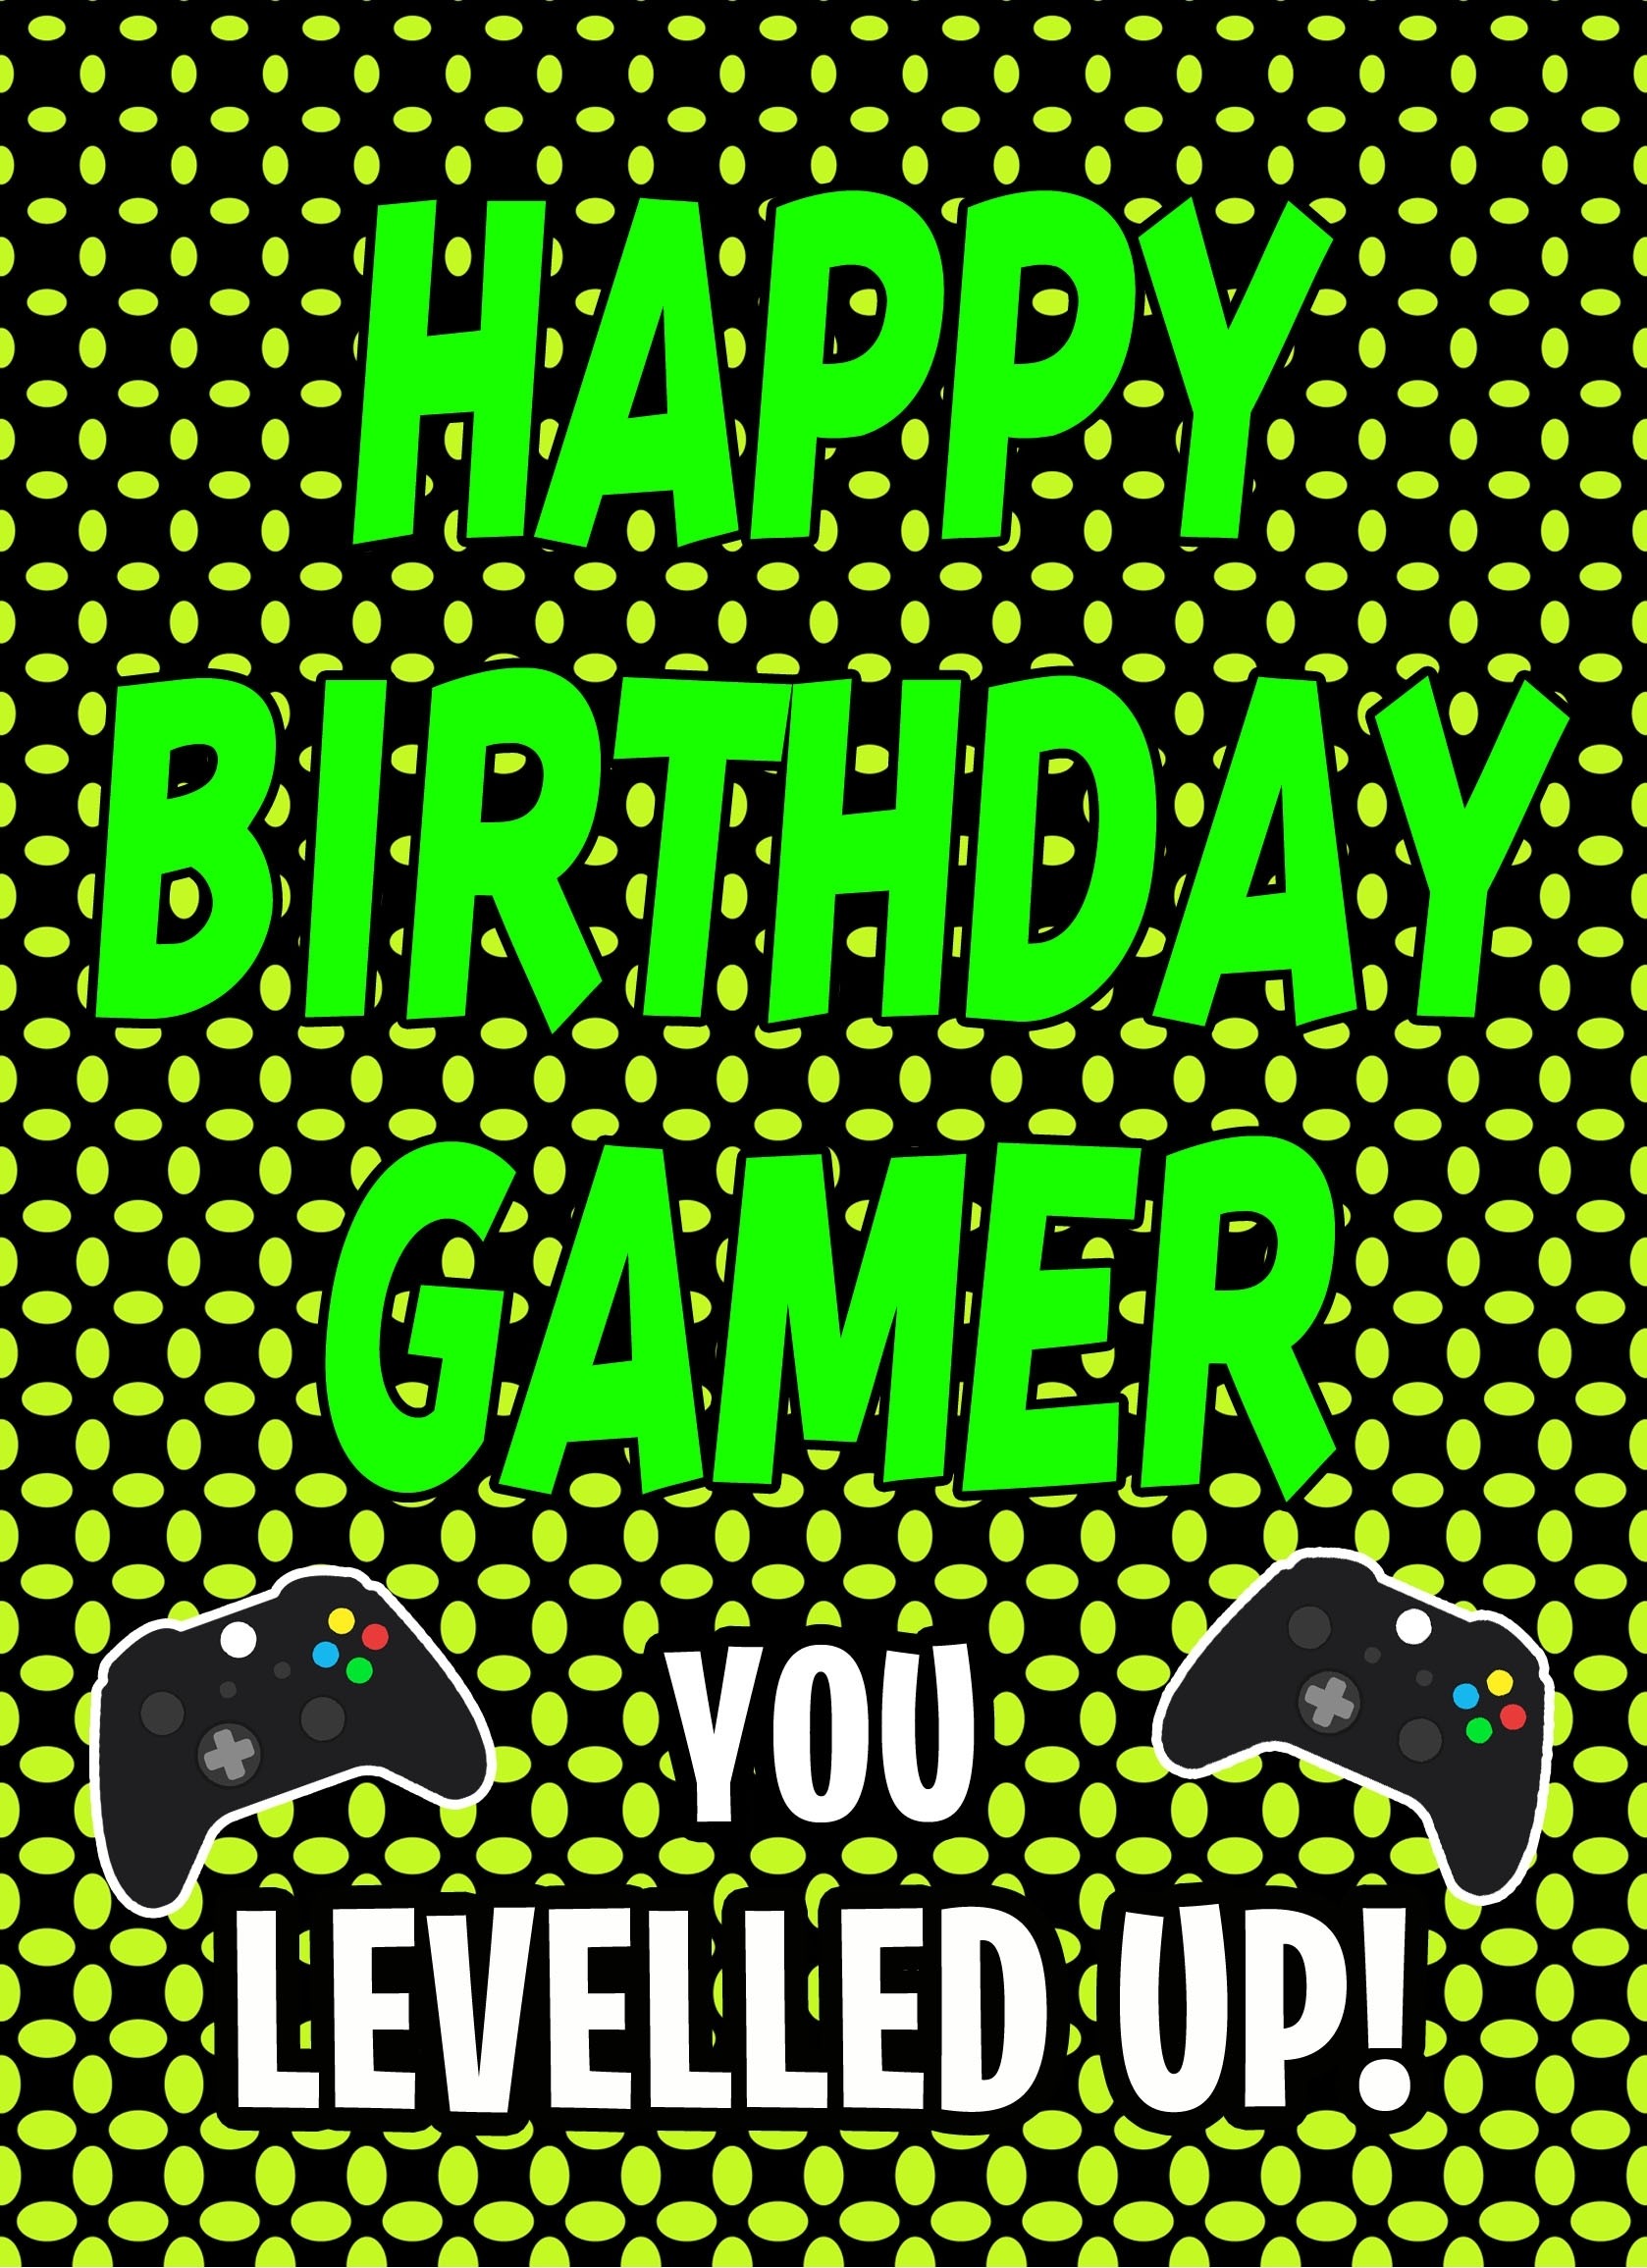 Birthday Greeting Card (Gamer Levelled Up)